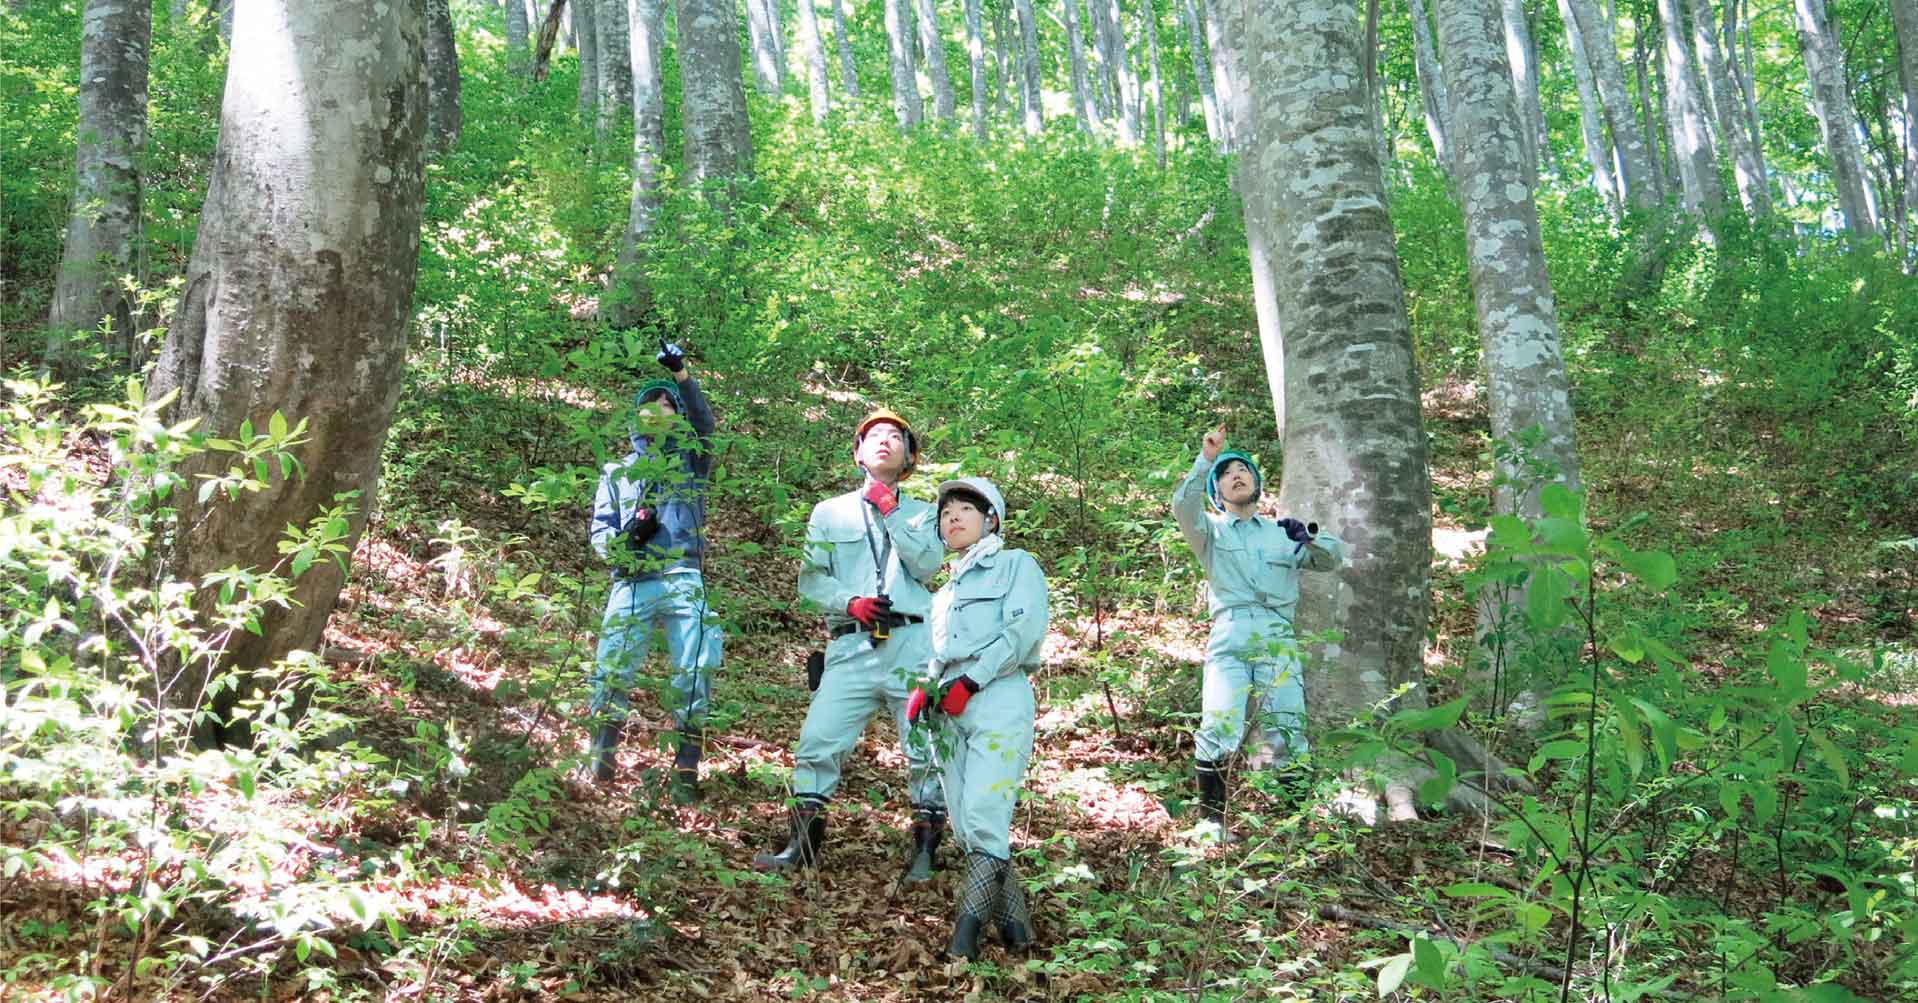 環境保全の技術を学ぶ 日本自然環境専門学校